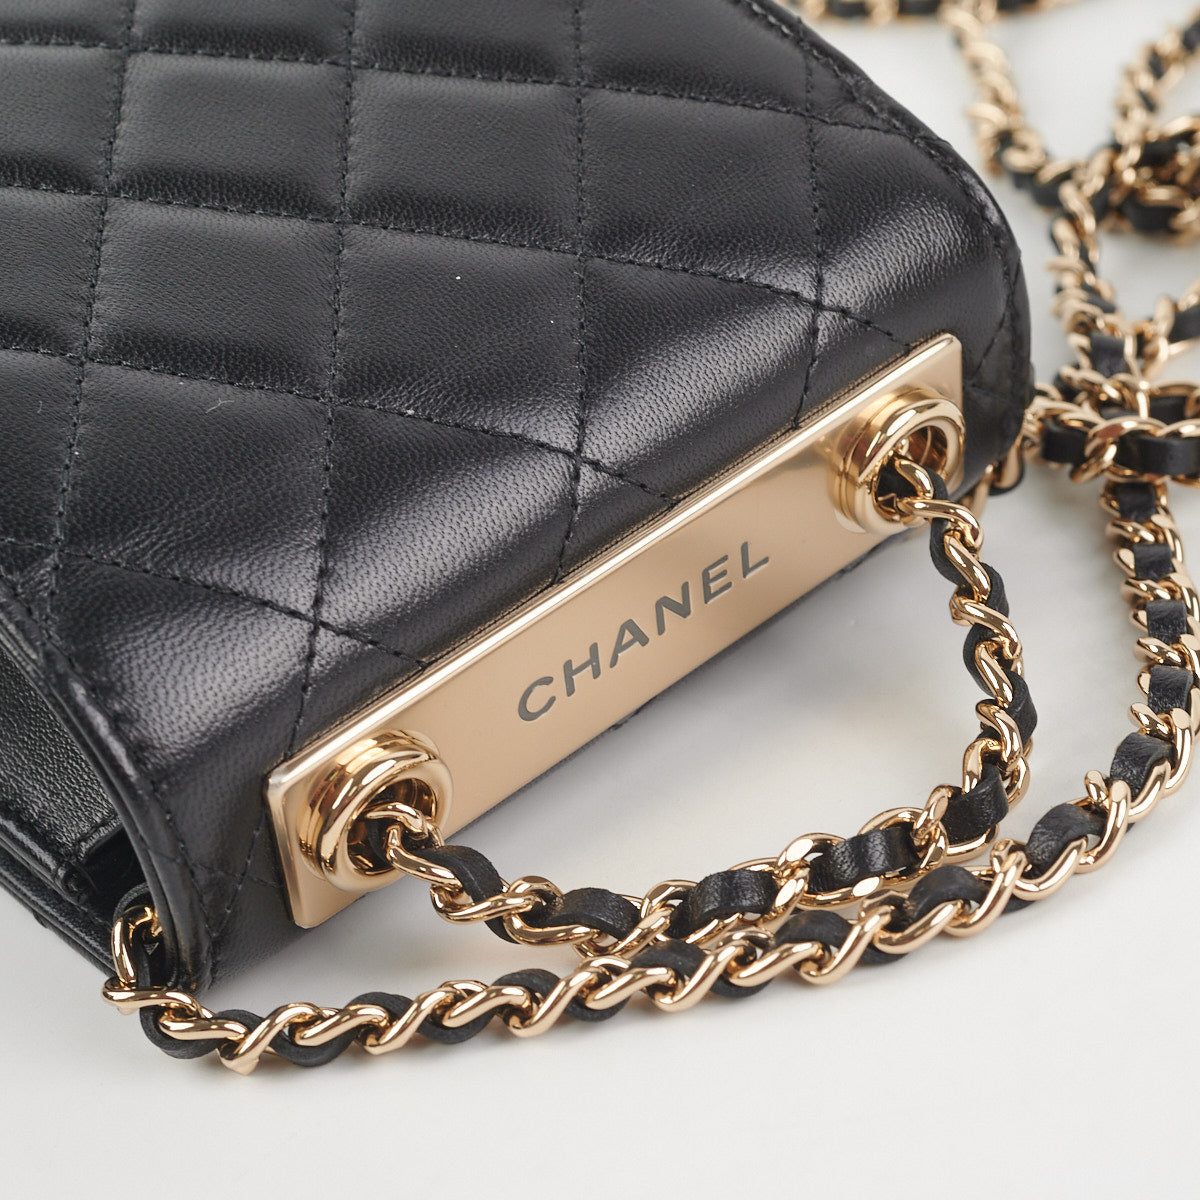 Chanel Mini Trendy CC Clutch With Chain